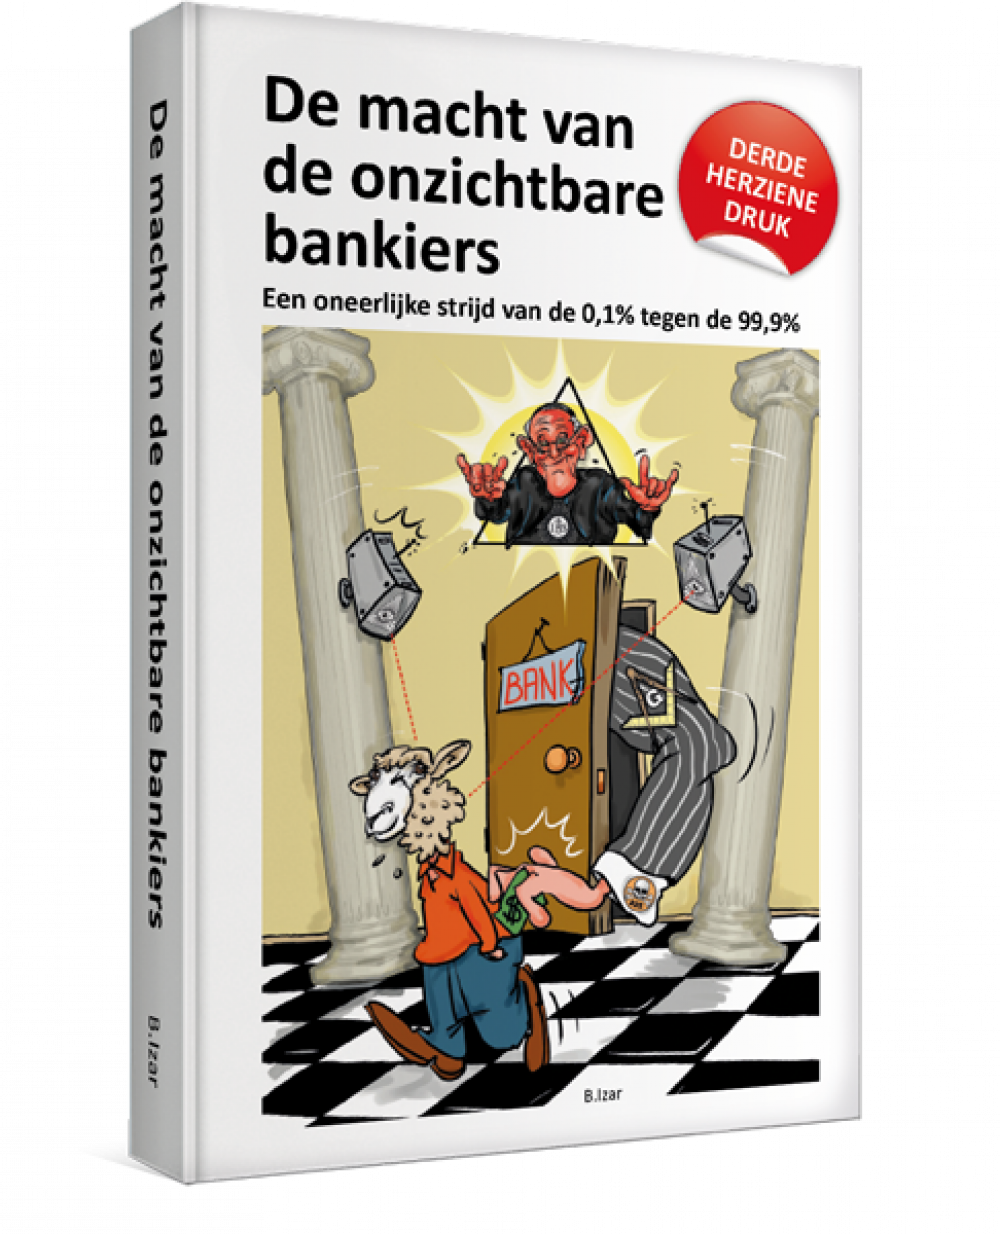 Onzichtbare-bankiers_mockup_2023-NL_derde-druk_web